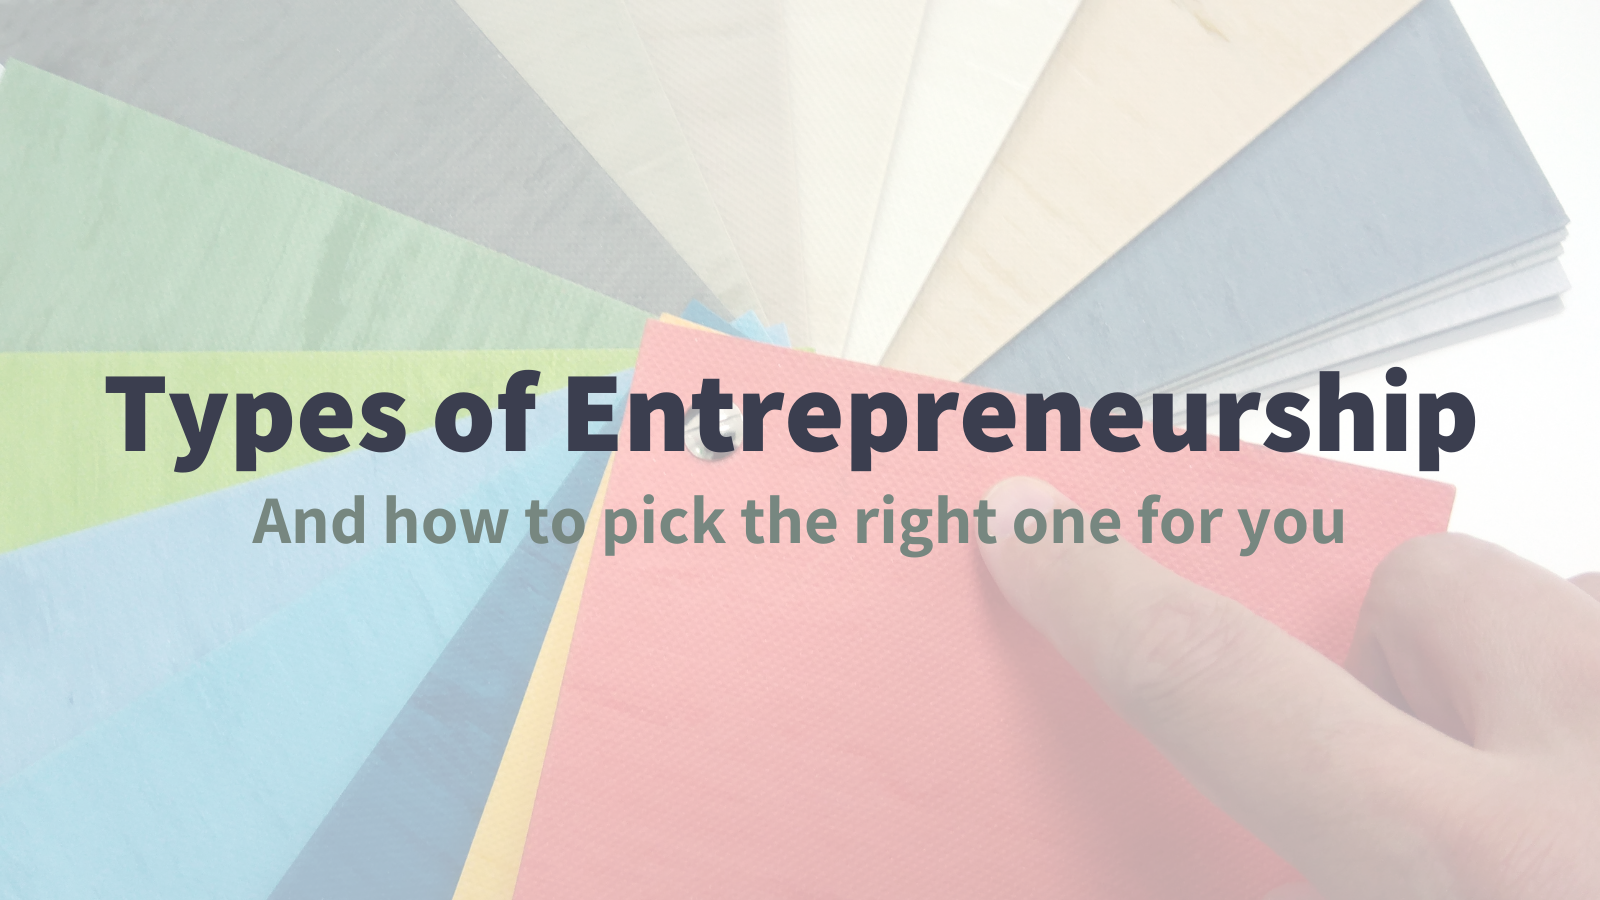 The 8 Types of Entrepreneurship